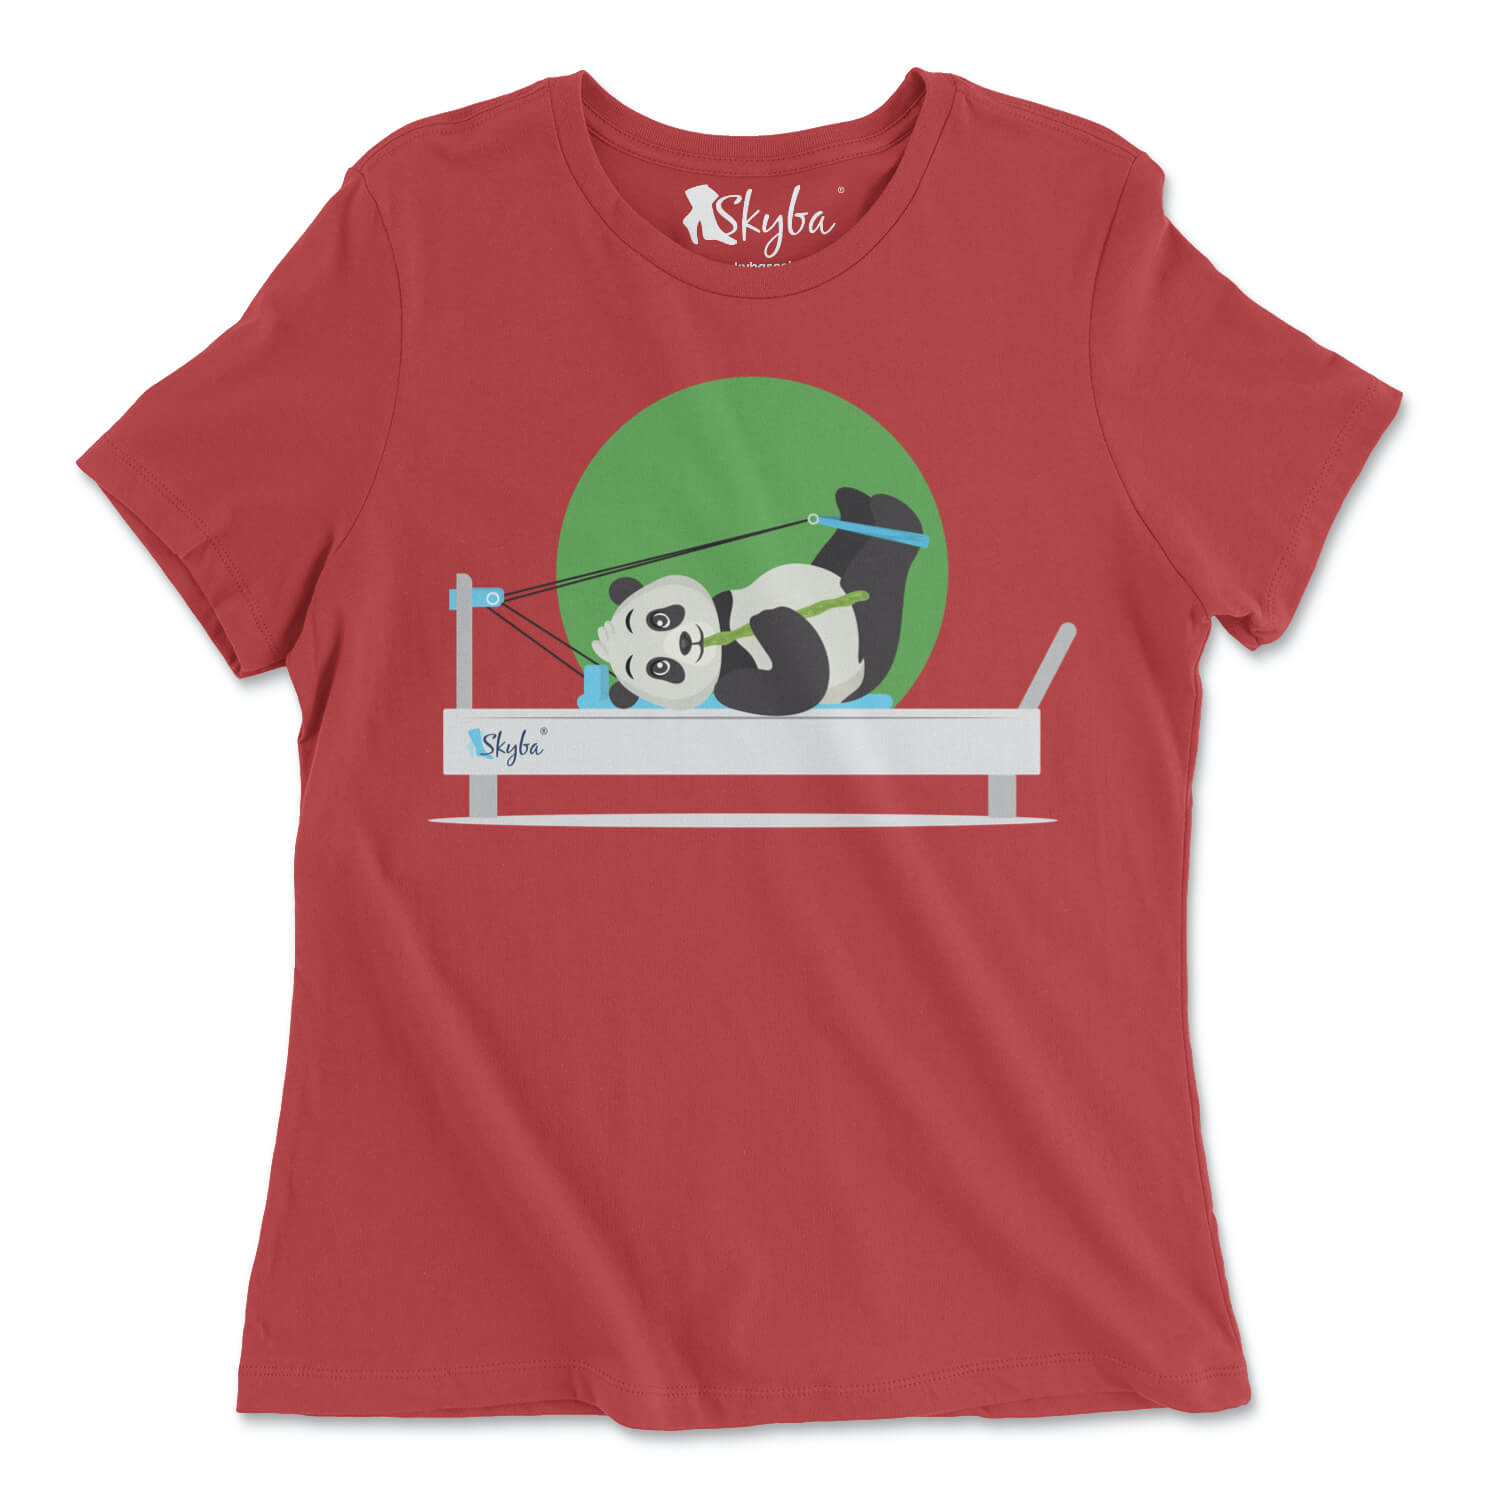 Hungry Panda on Reformer - Classic Tee Skyba T-Shirt